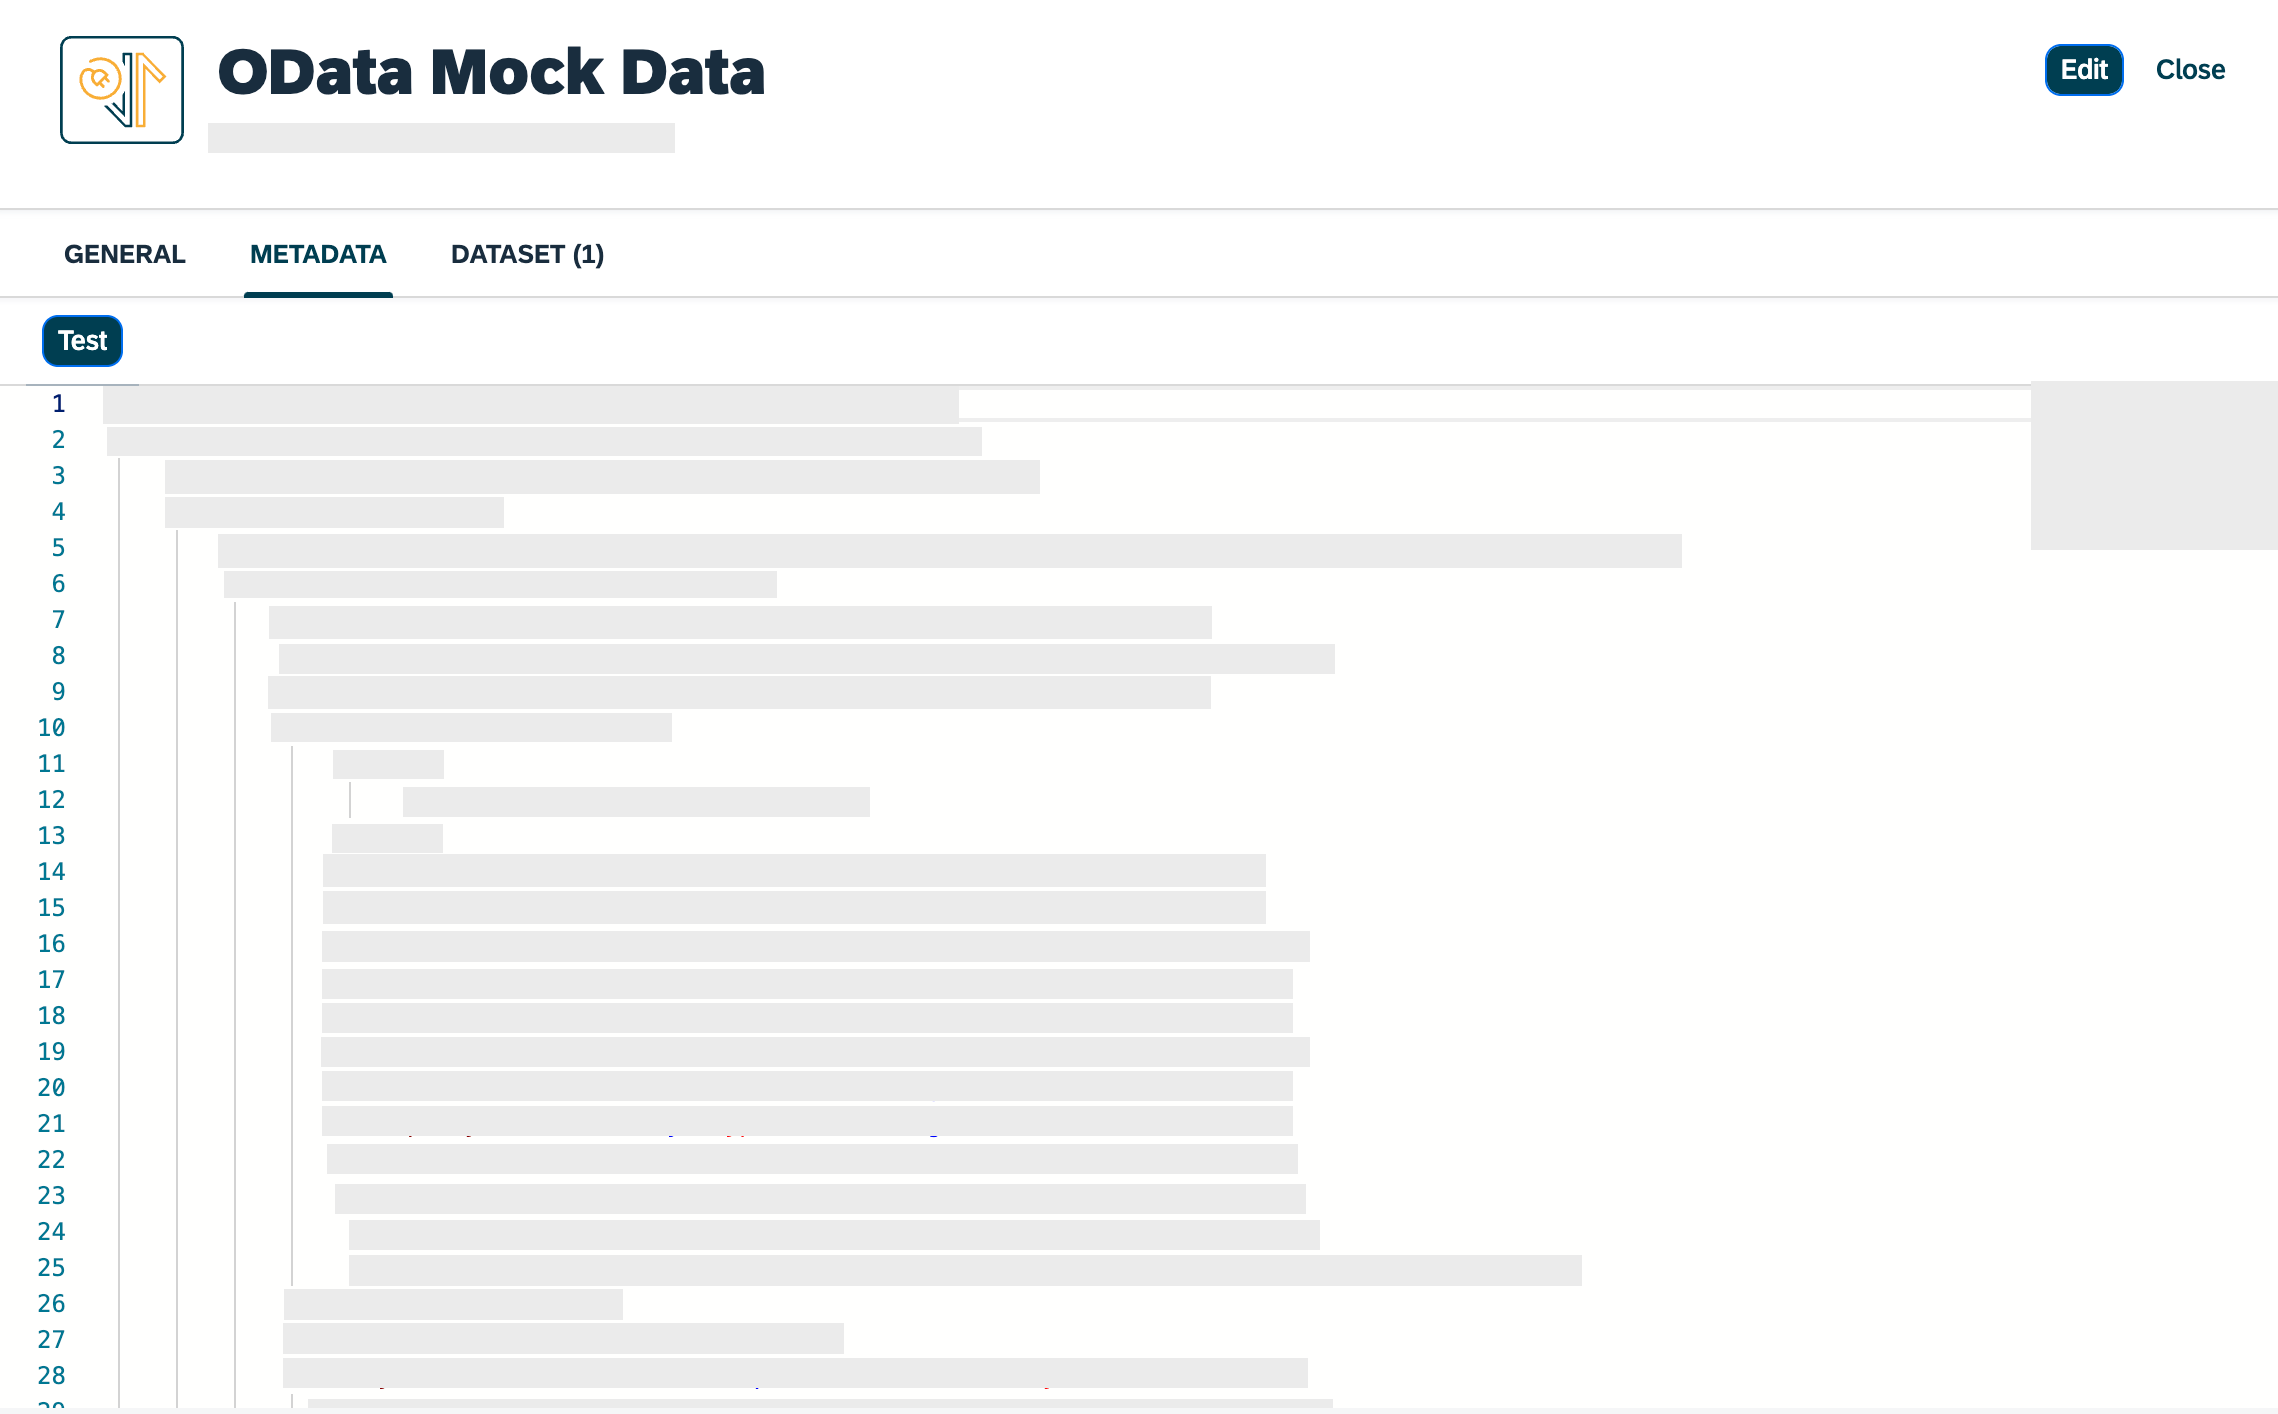 odata mock data metadata example